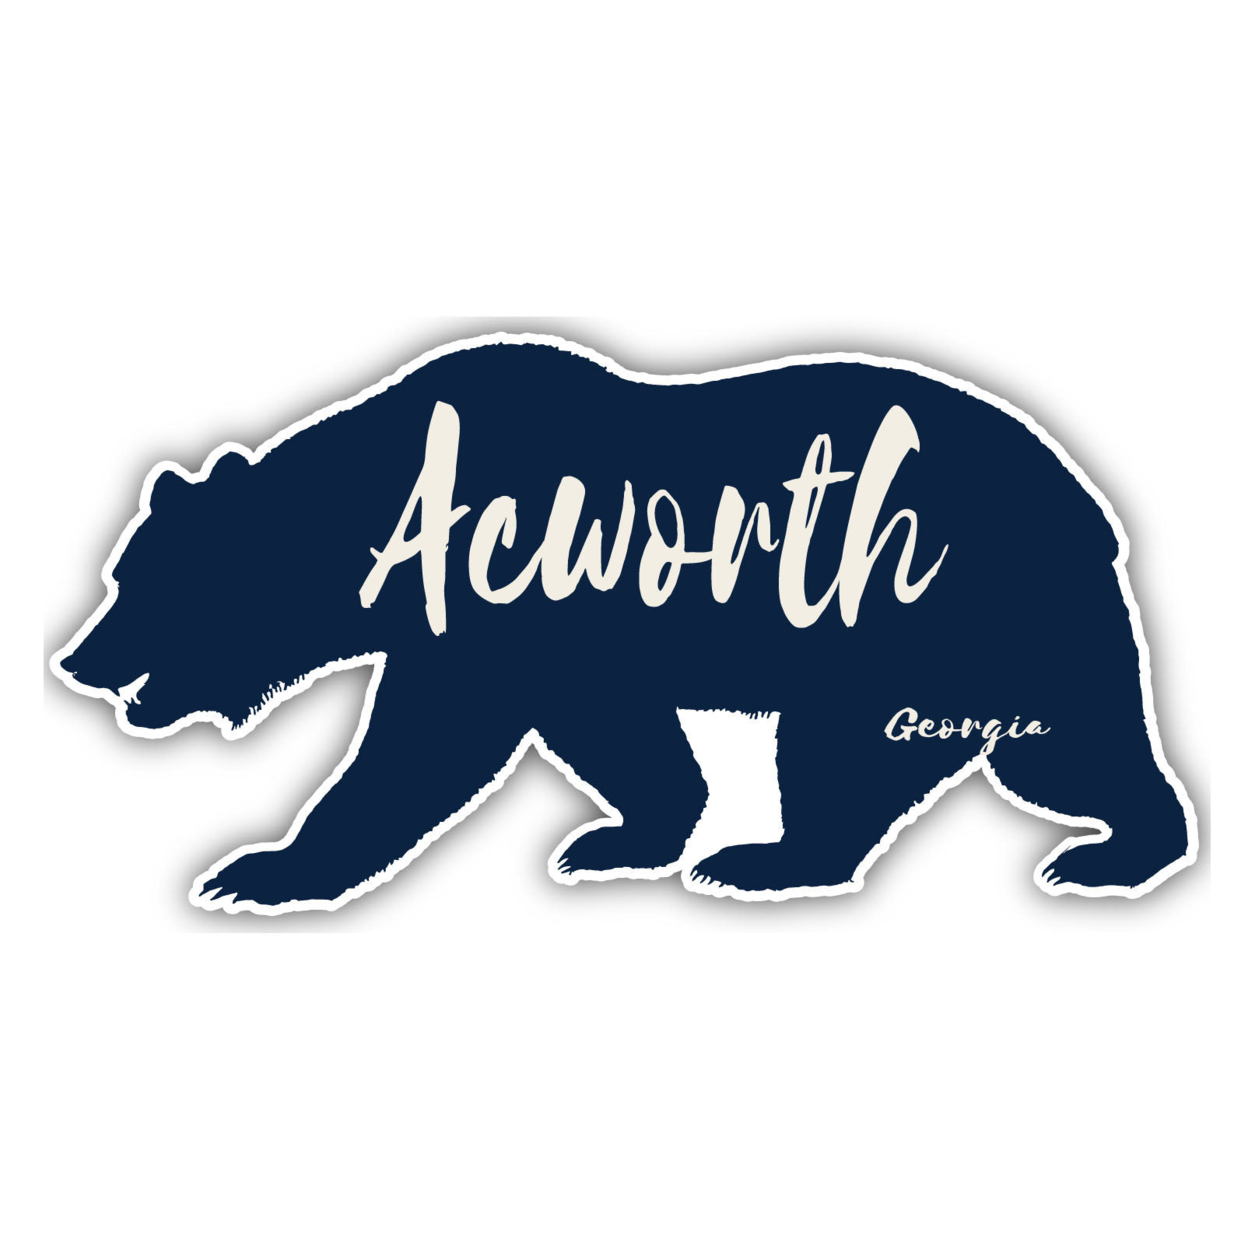 Acworth Georgia Souvenir Decorative Stickers (Choose Theme And Size) - 4-Pack, 12-Inch, Bear